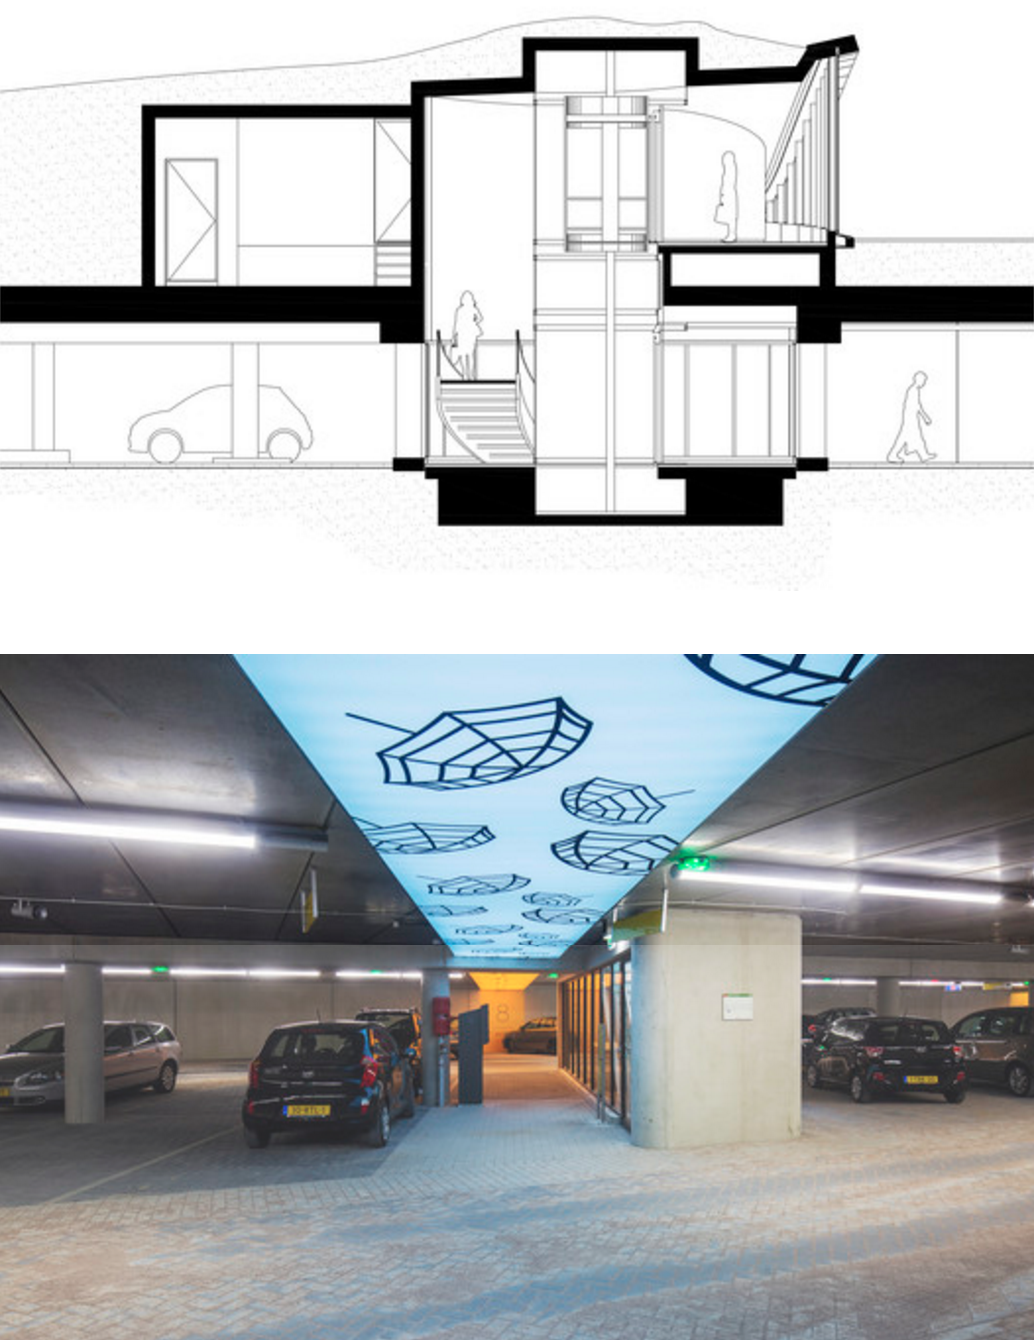 aparcamiento-subterraneo-royal-haskoningdhv